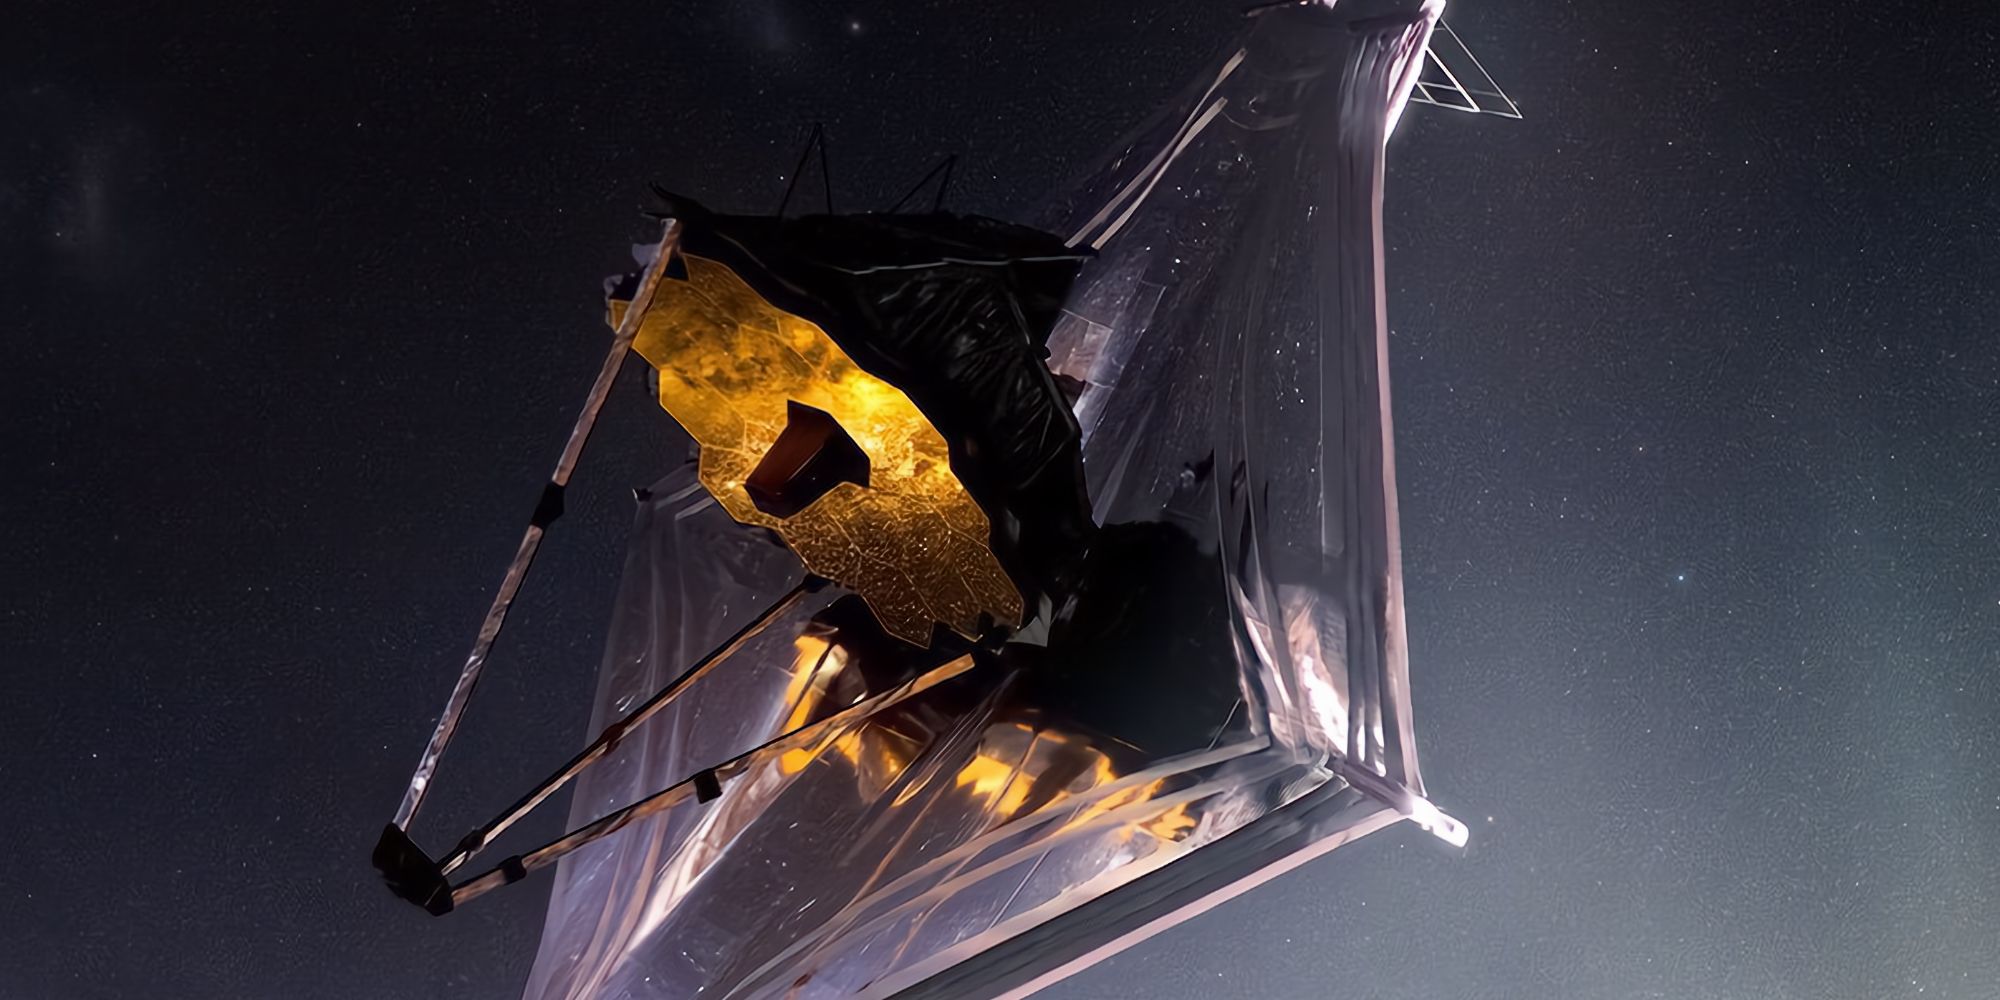 Artist render of the James Webb telescope deployed in space